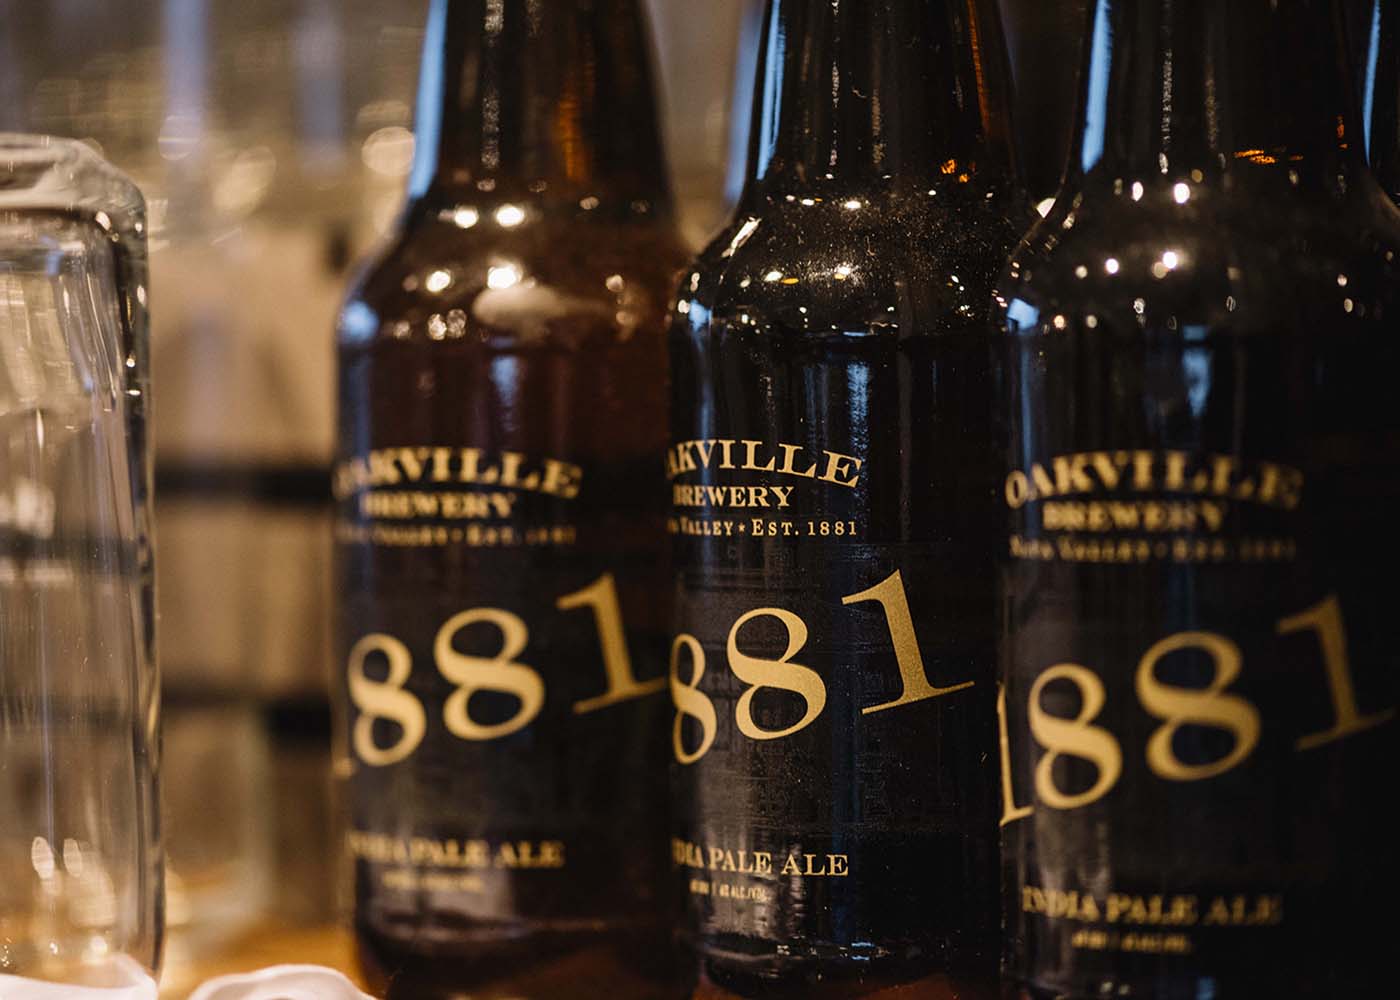 Oakville Grocery 1881 beer pale ale